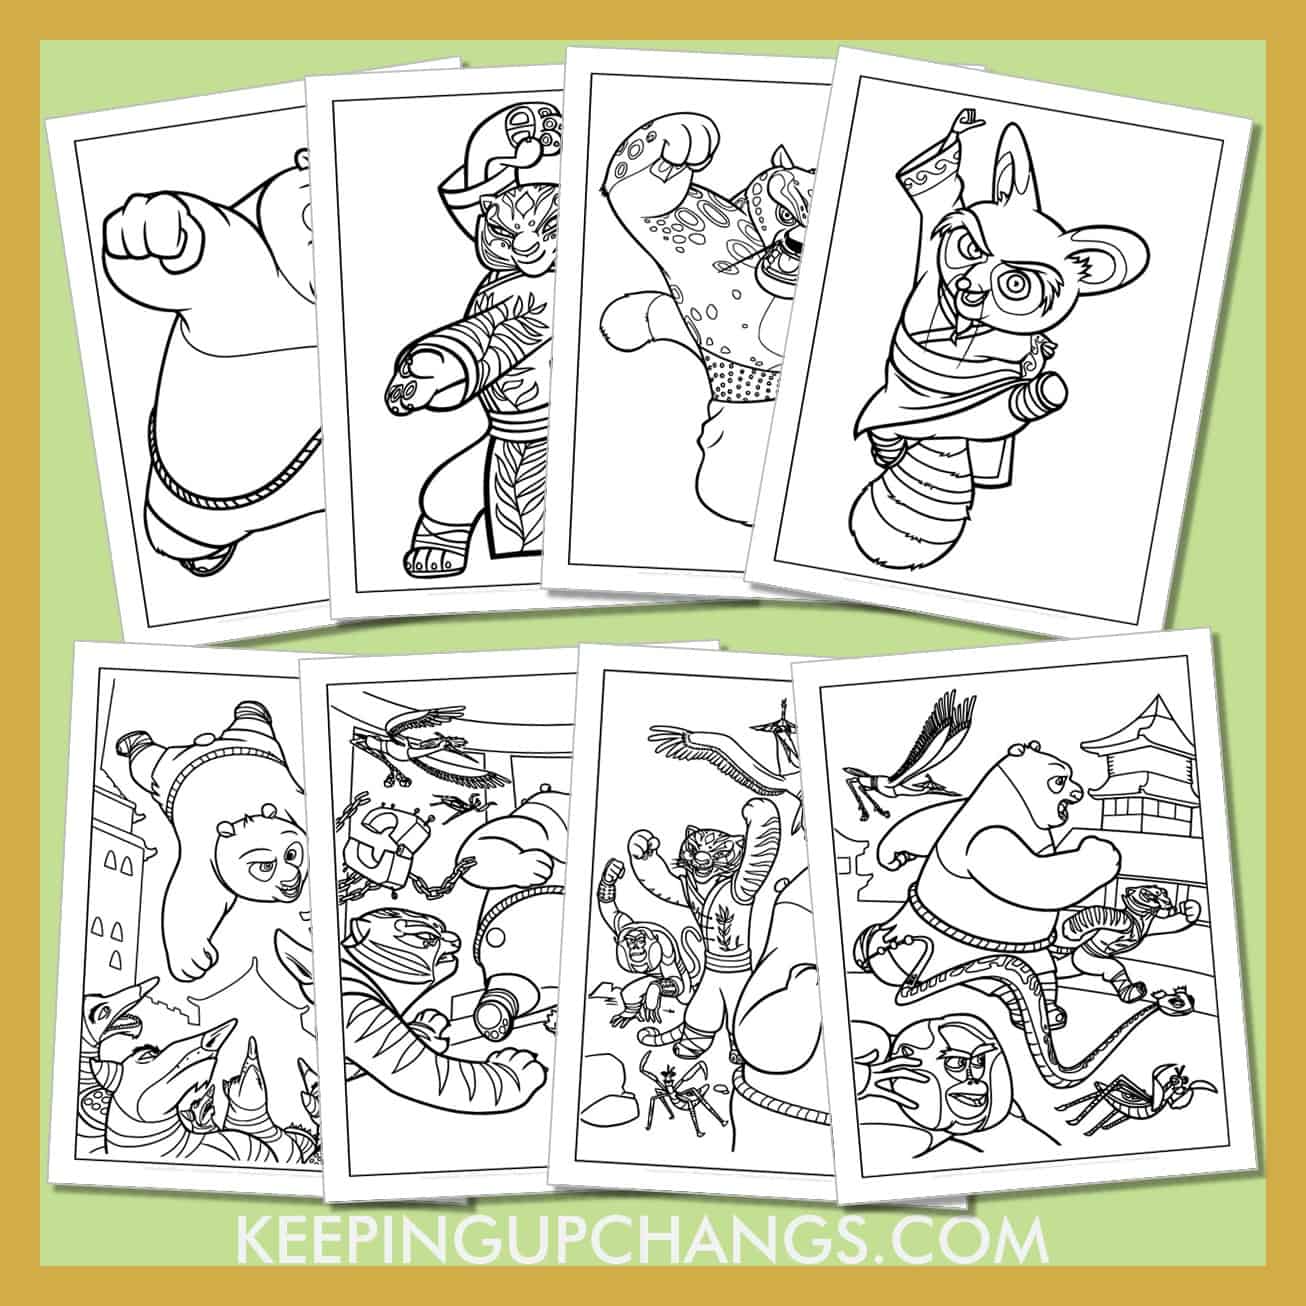 kung fu colouring sheets including po, tigress, master shifu, tai lung, crane, monkey and more.